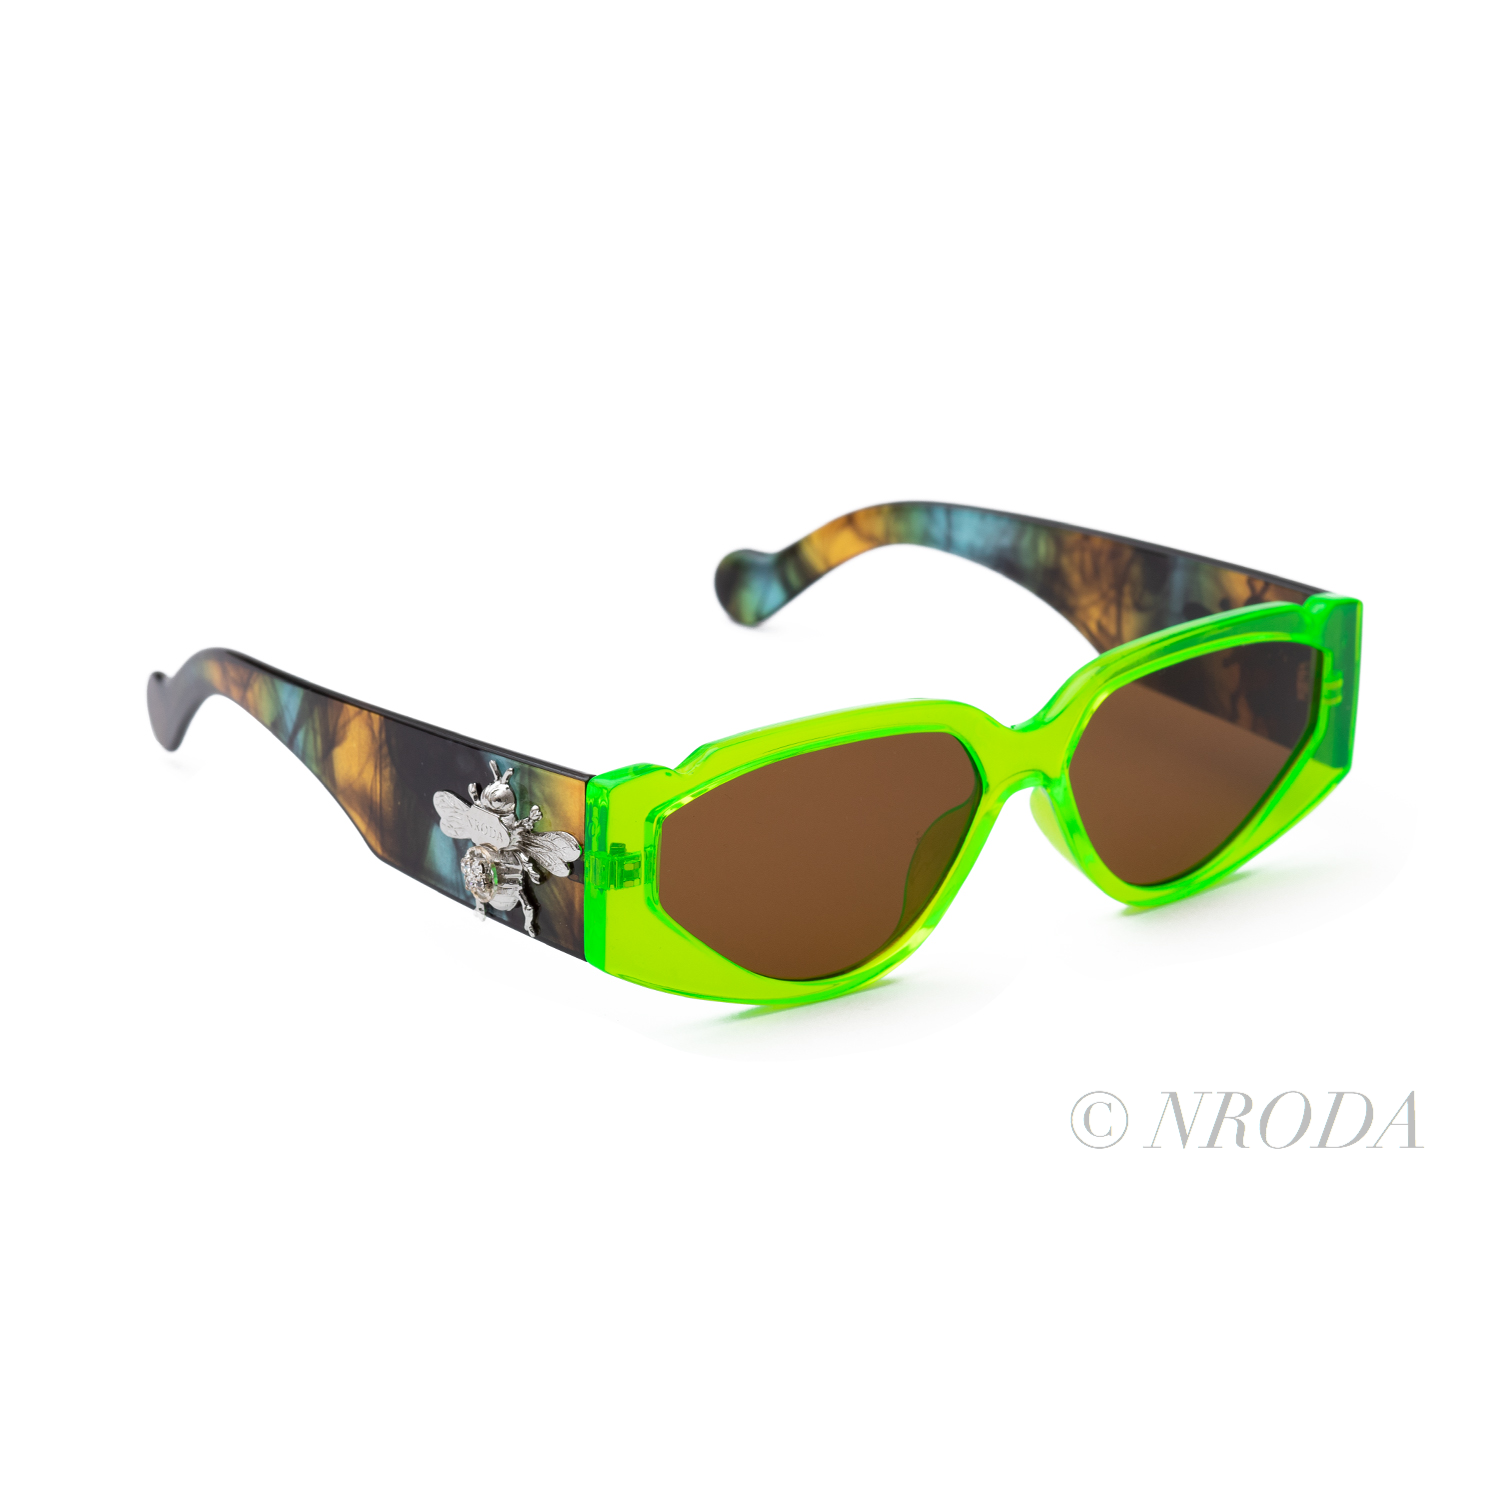 Nroda Gianni Love Bee - Gemstone edition Peridot Green Eyewear Sunglasses Collection, Tnemnroda man- NRODA